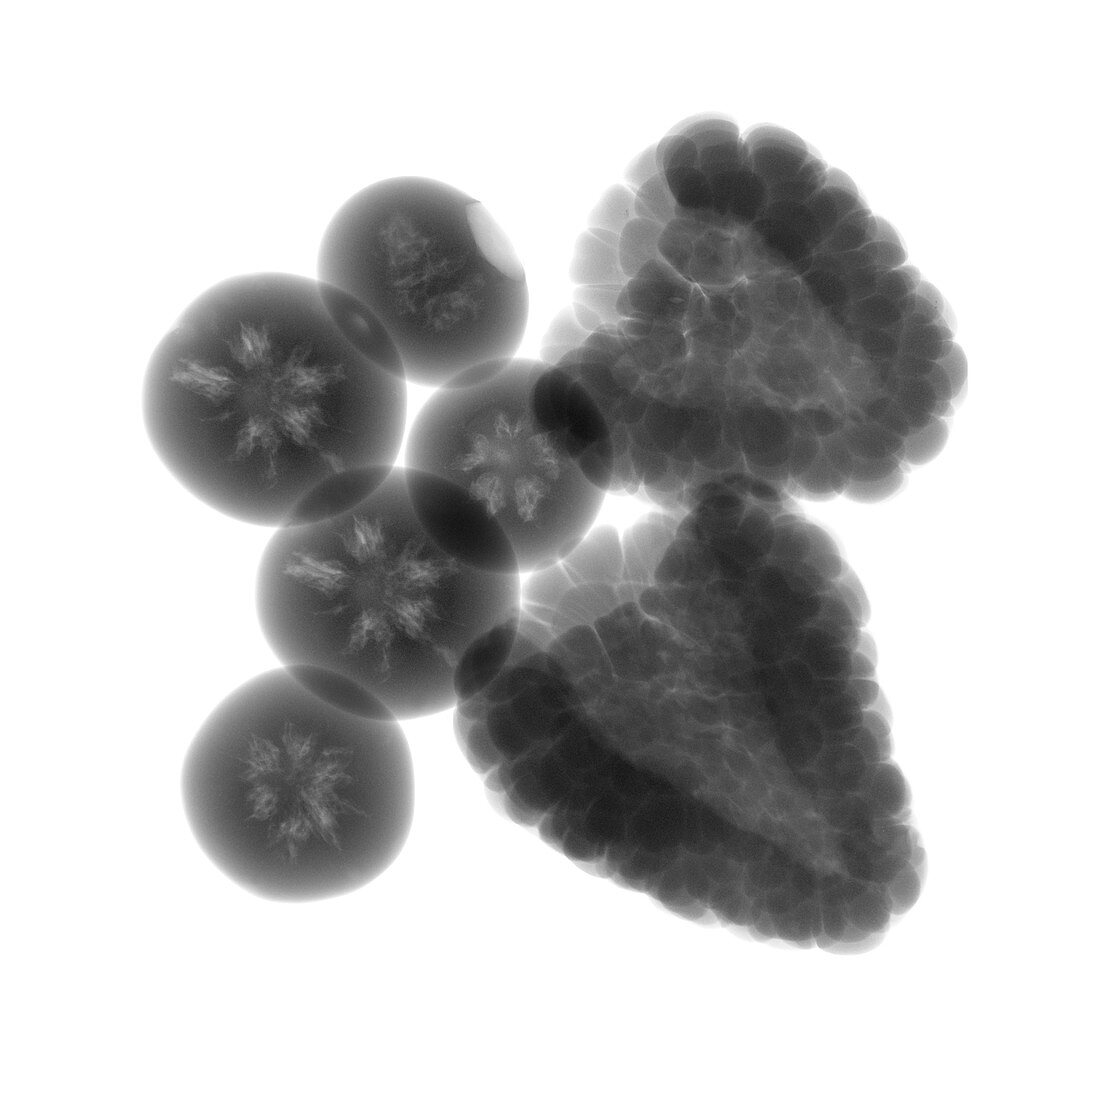 Raspberries and blueberries, X-ray